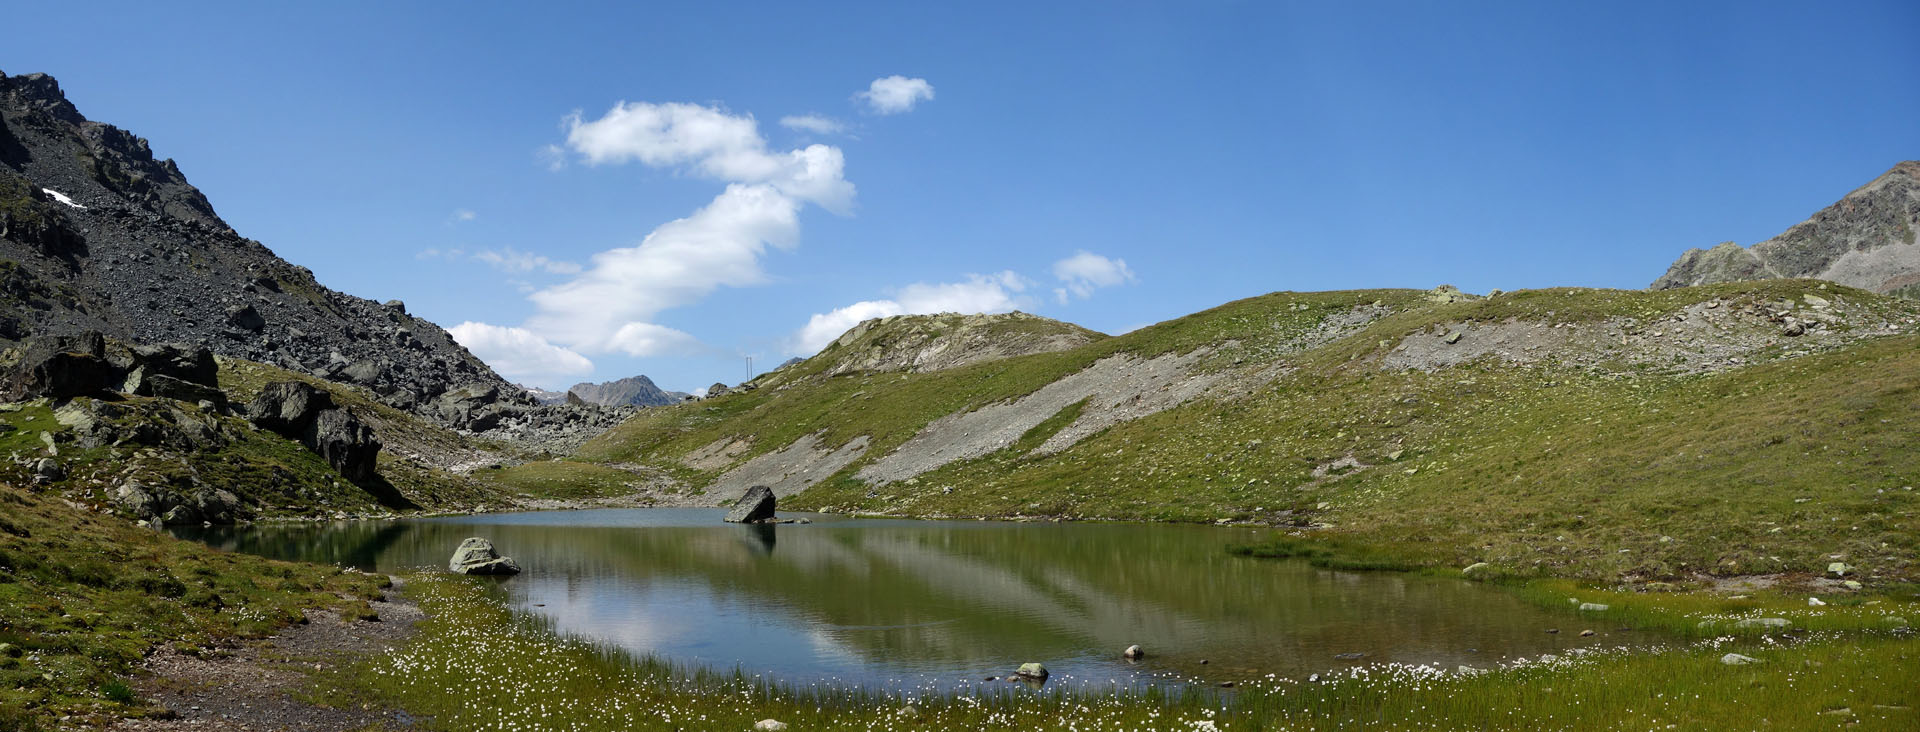 Alpensee